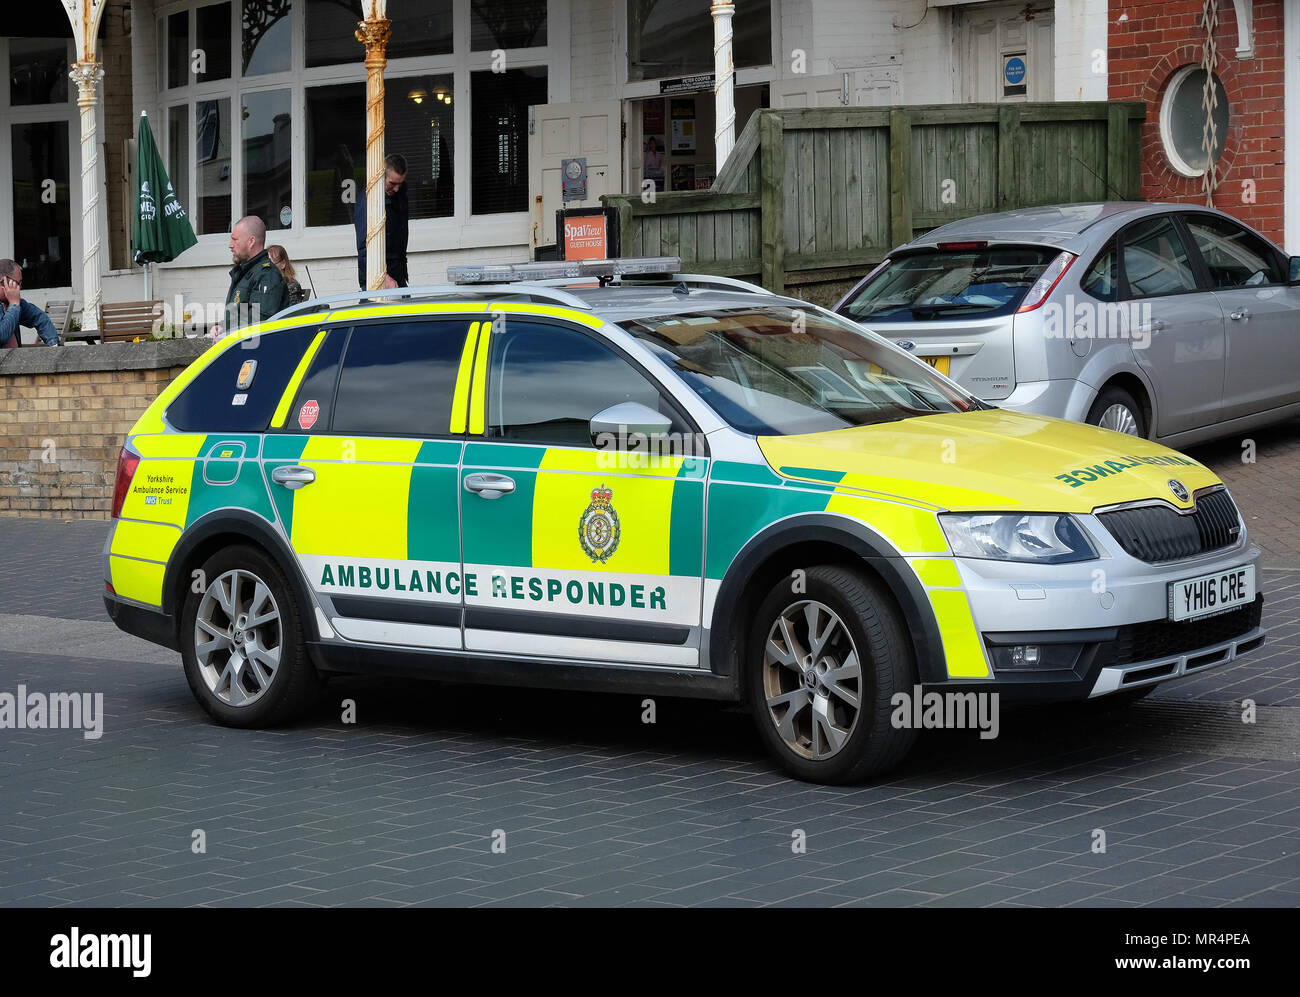 Rapid response NHS car ambulance vehicle in use. Stock Photo